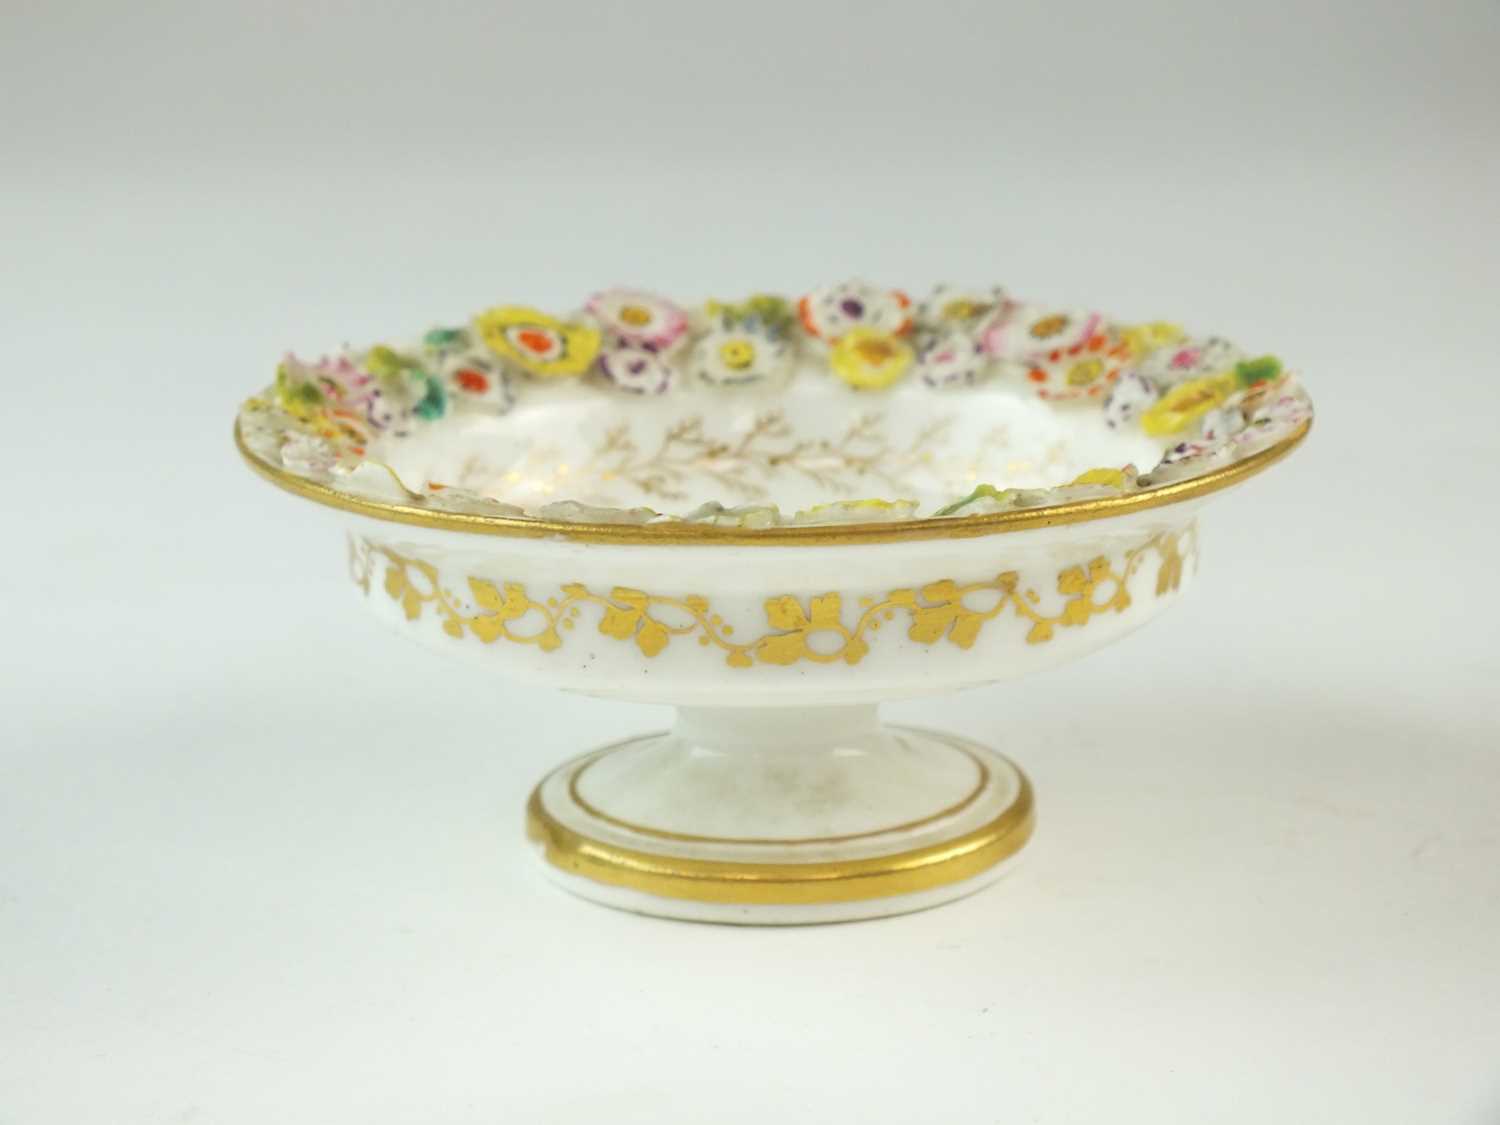 Lot 137 - A rare porcelain miniature tazza attributed to Nantgarw, circa 1818-20